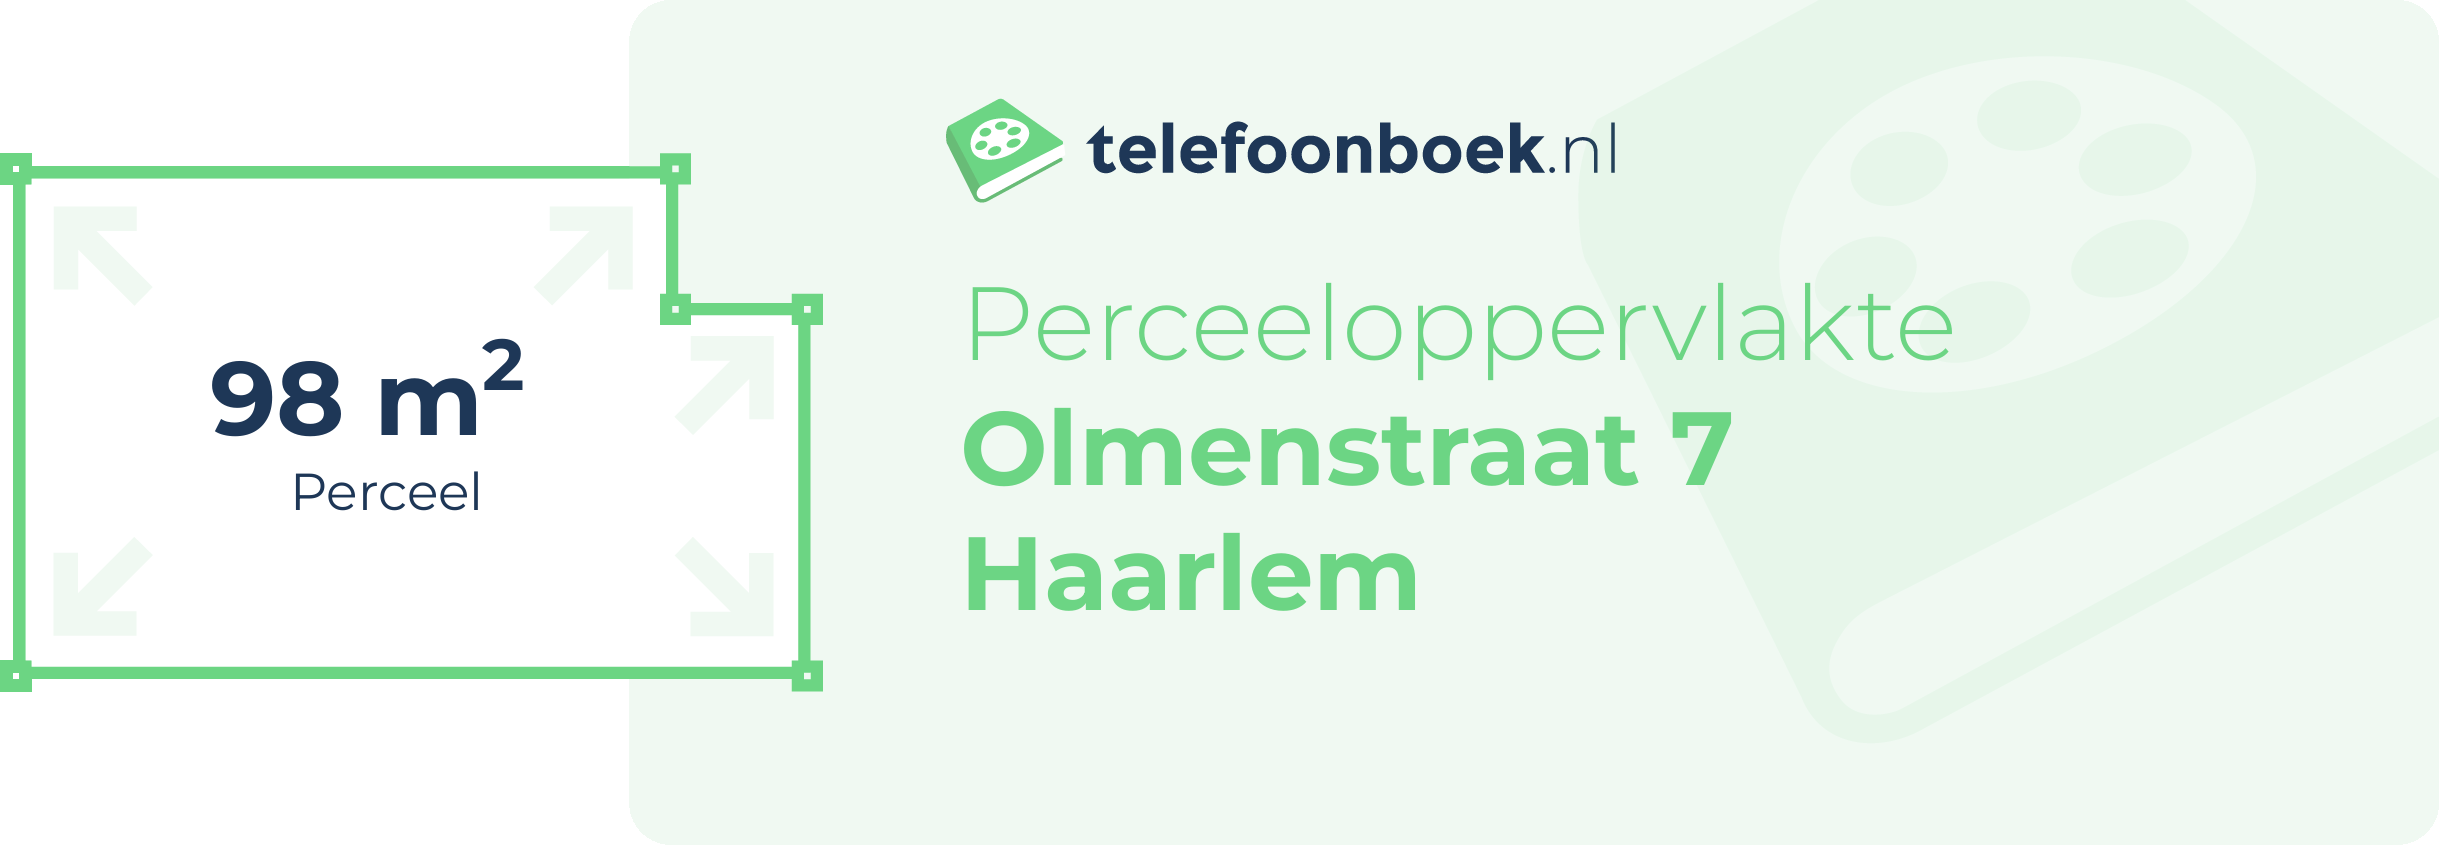 Perceeloppervlakte Olmenstraat 7 Haarlem